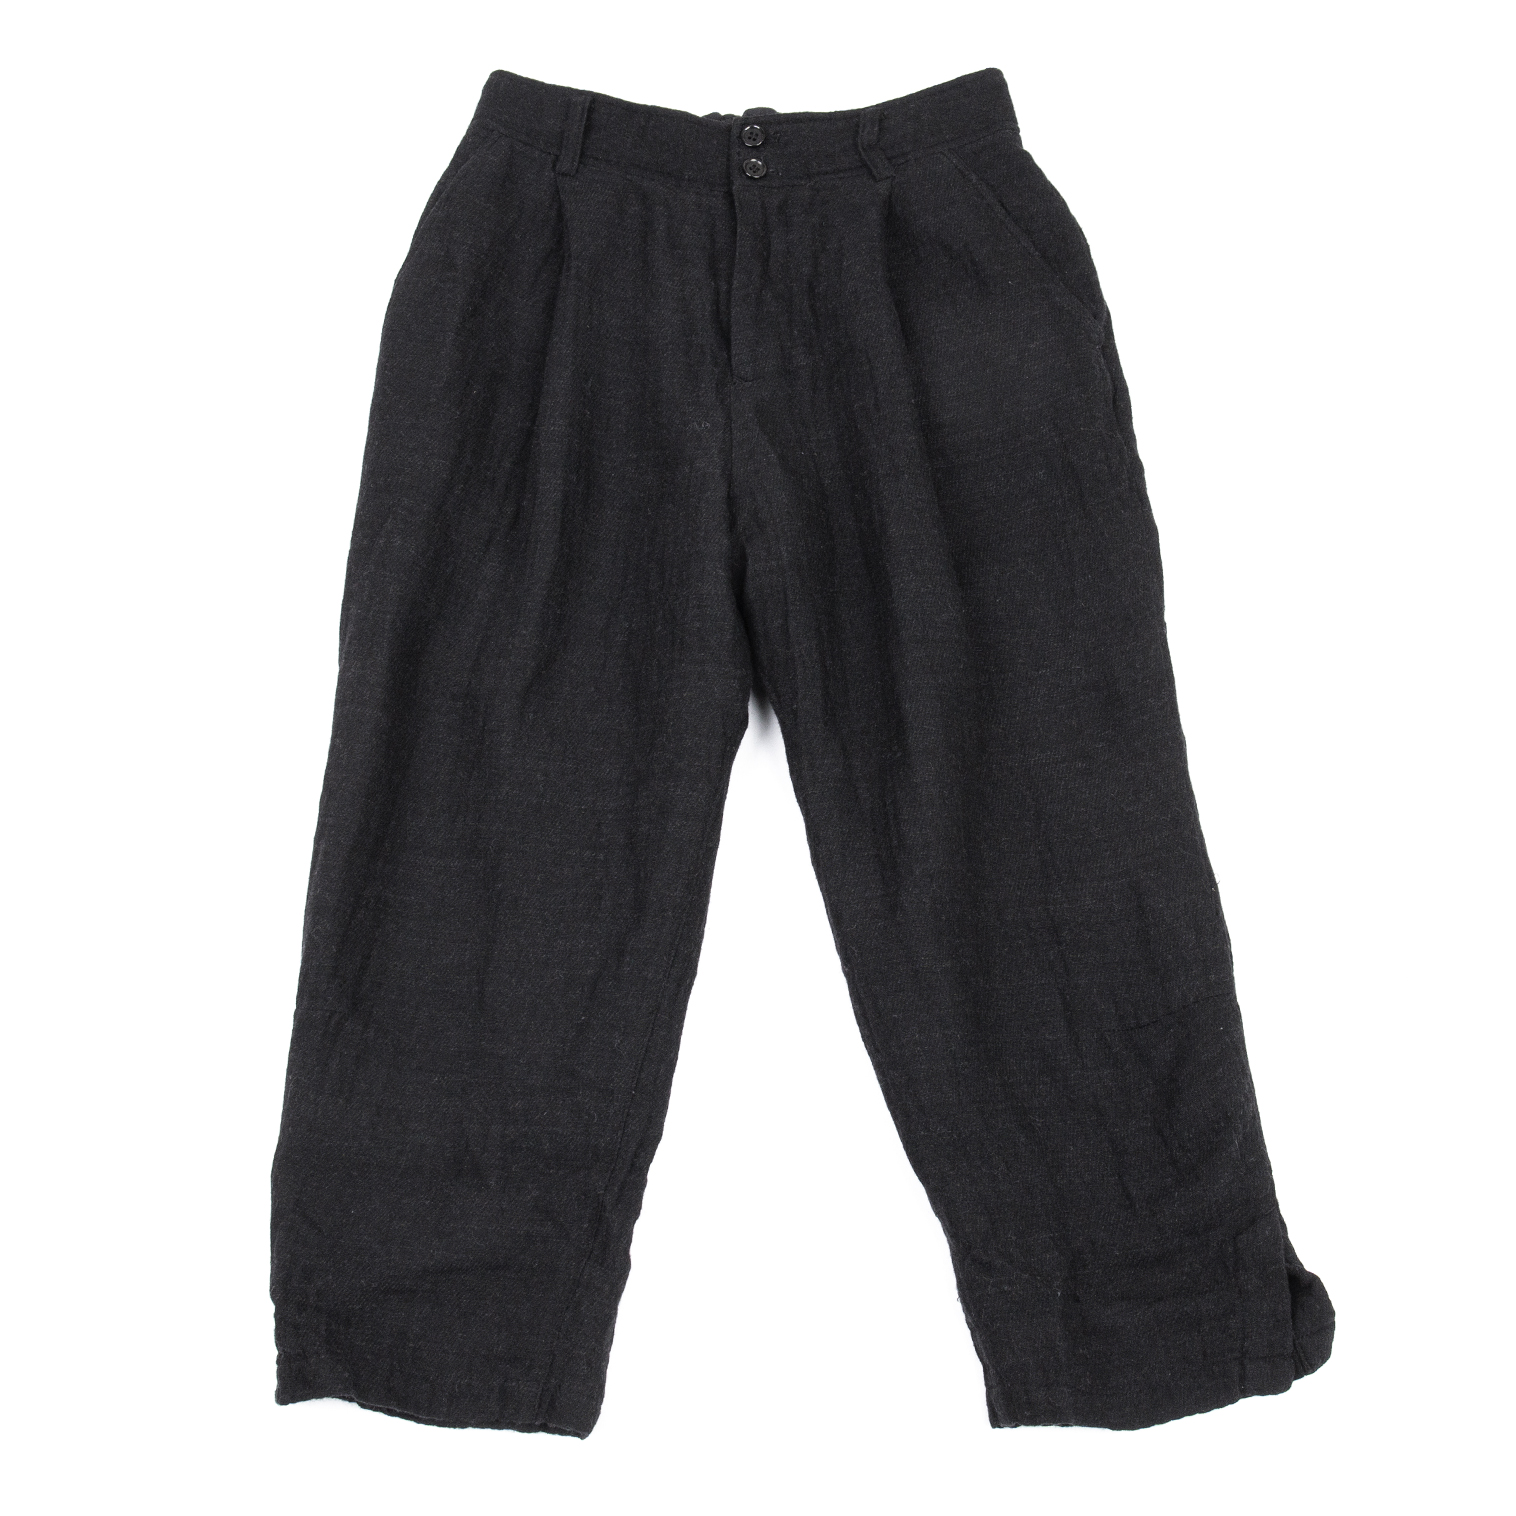 Plantation Wool Cotton Blend Cropped Pants (Trousers) Black S | PLAYFUL